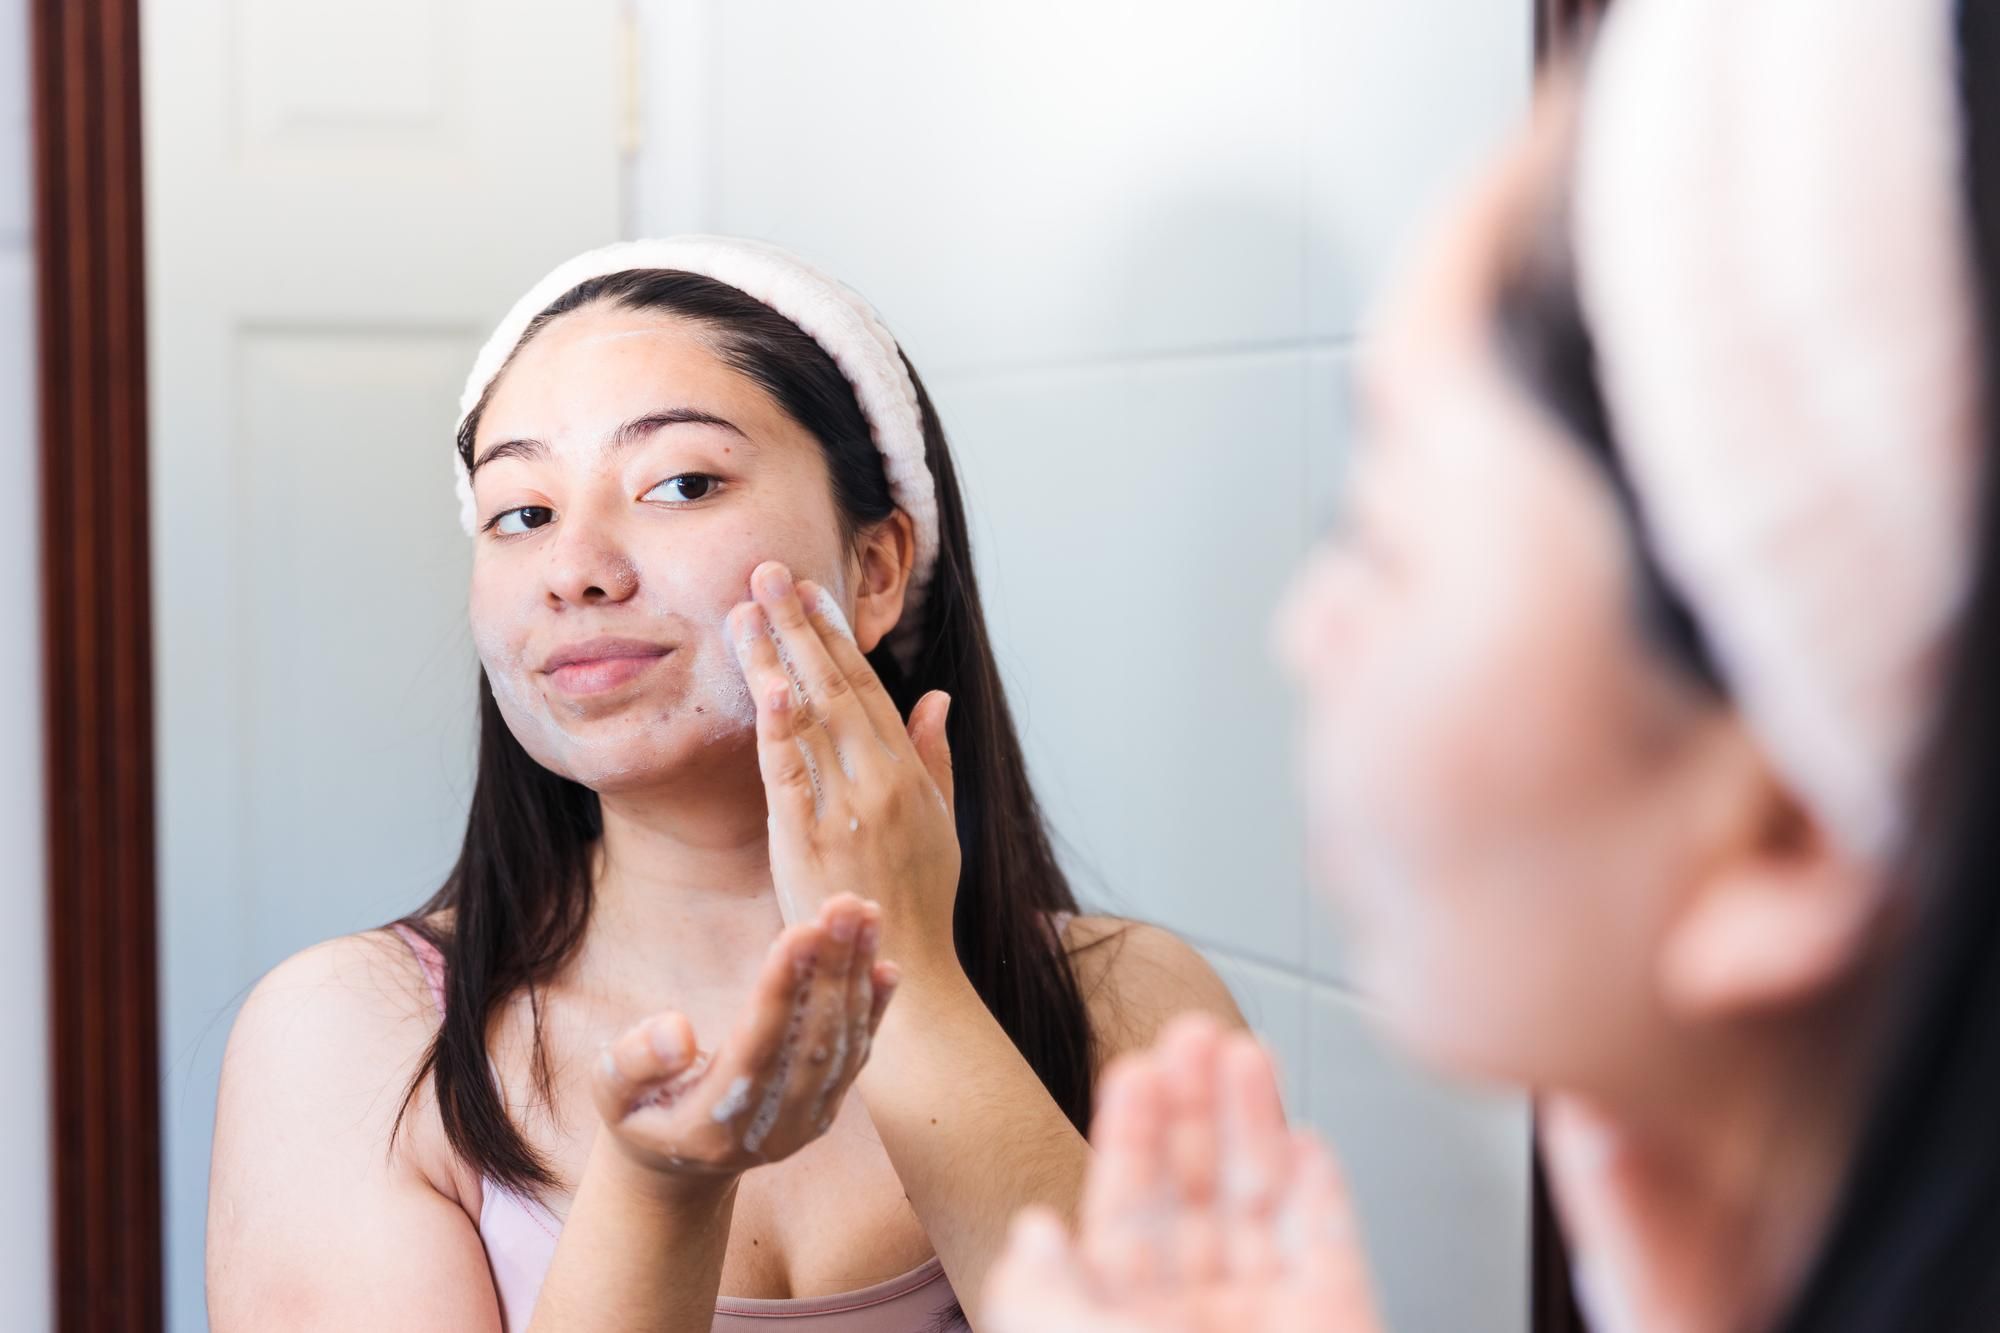 Overwashing can increase whitehead acne